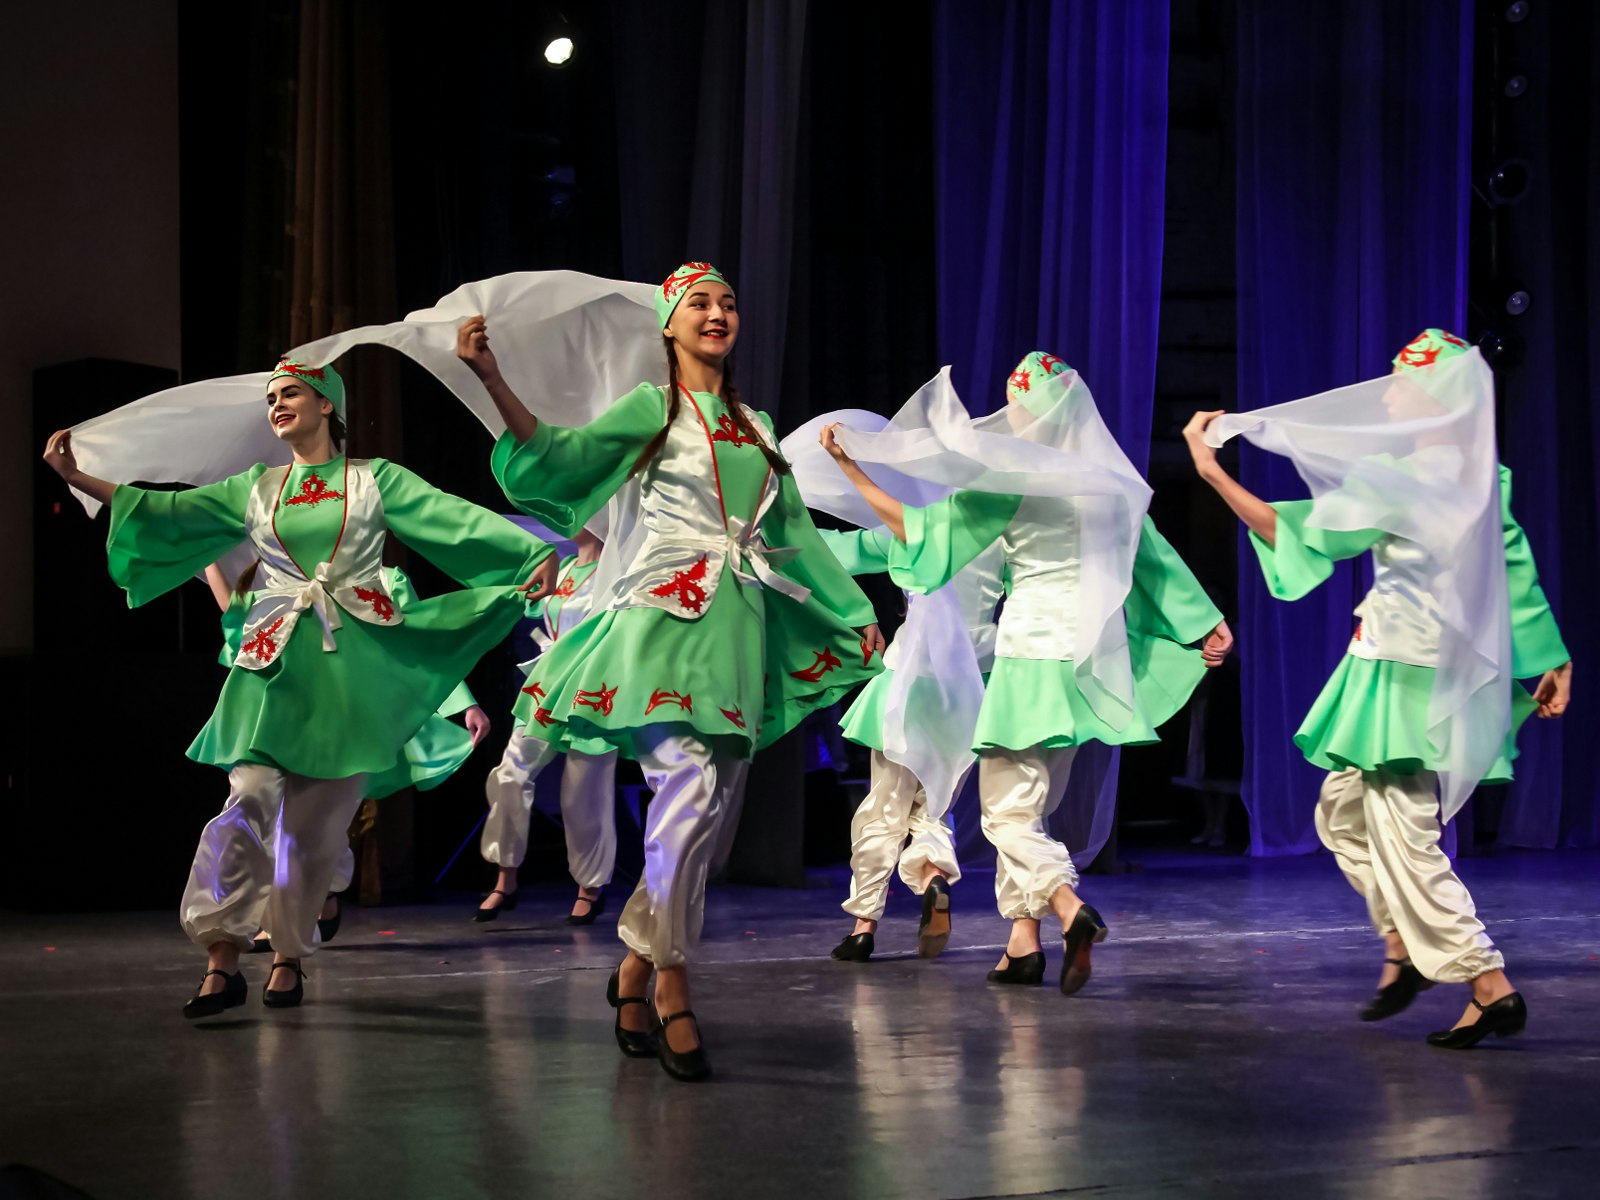 Children performing a Jewish dance at the international festival 'Seven steps' in Tomsk © Julia Kaysa / Shutterstock